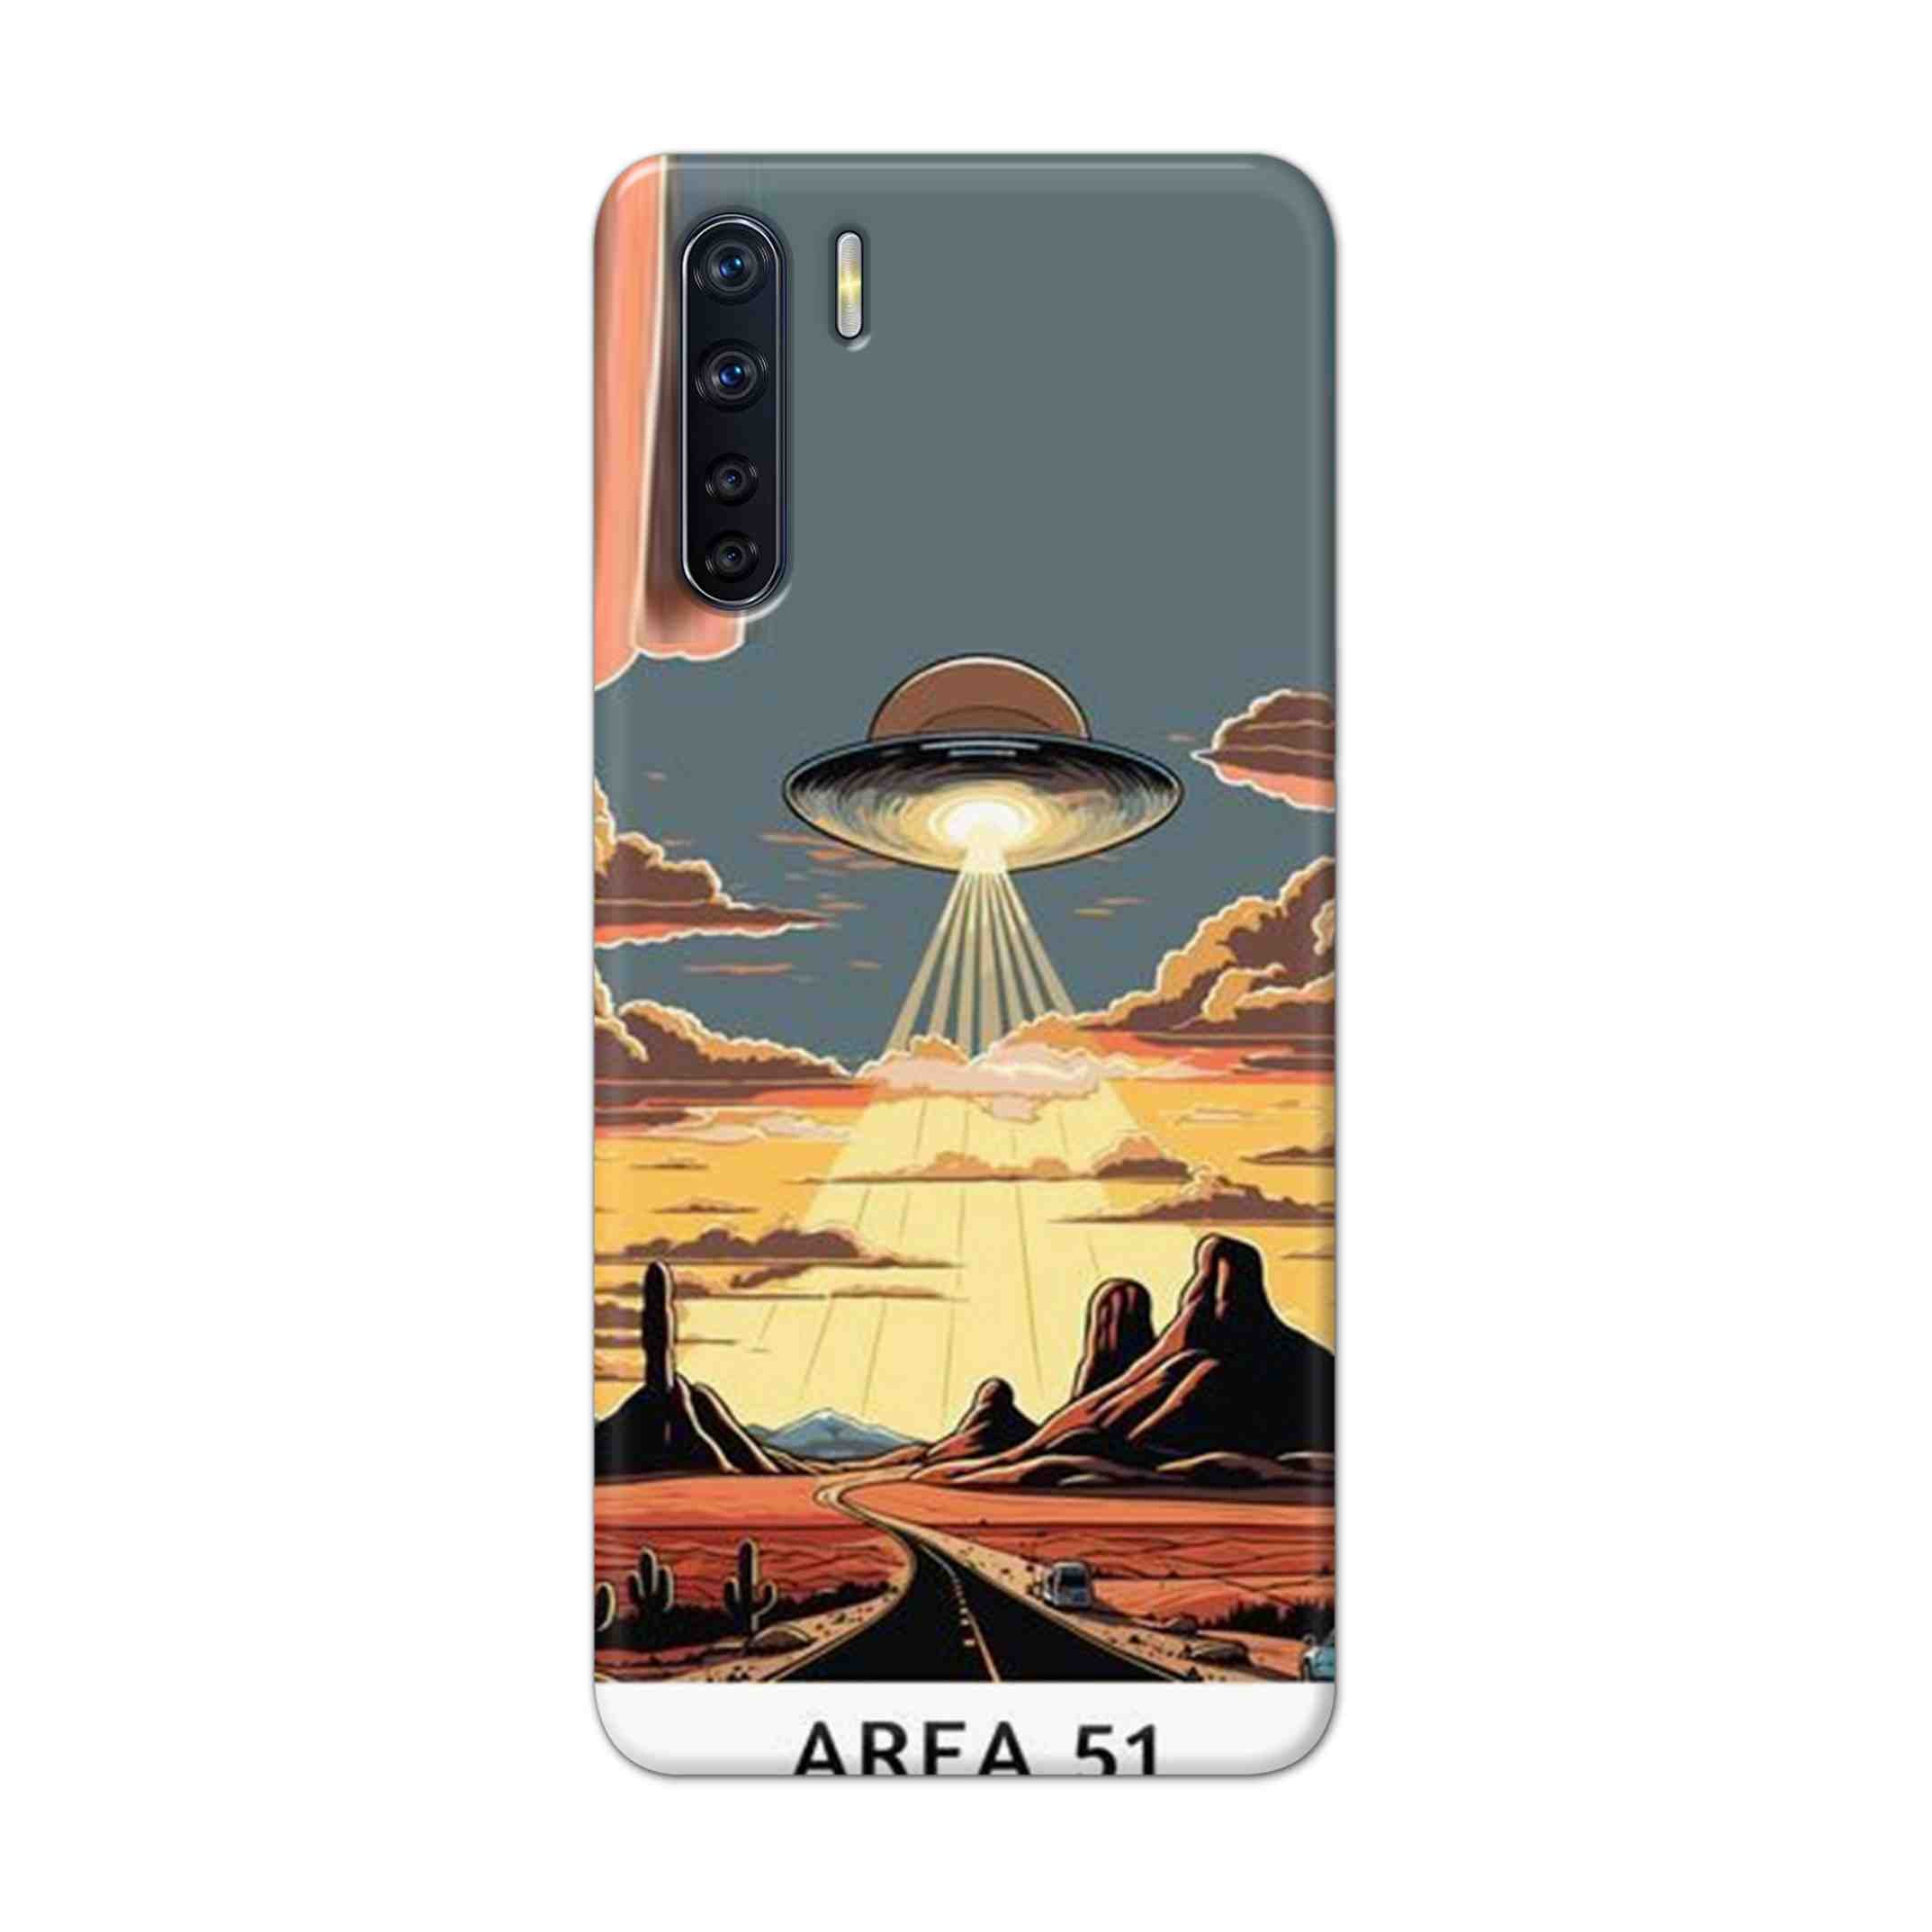 Buy Area 51 Hard Back Mobile Phone Case Cover For OPPO F15 Online